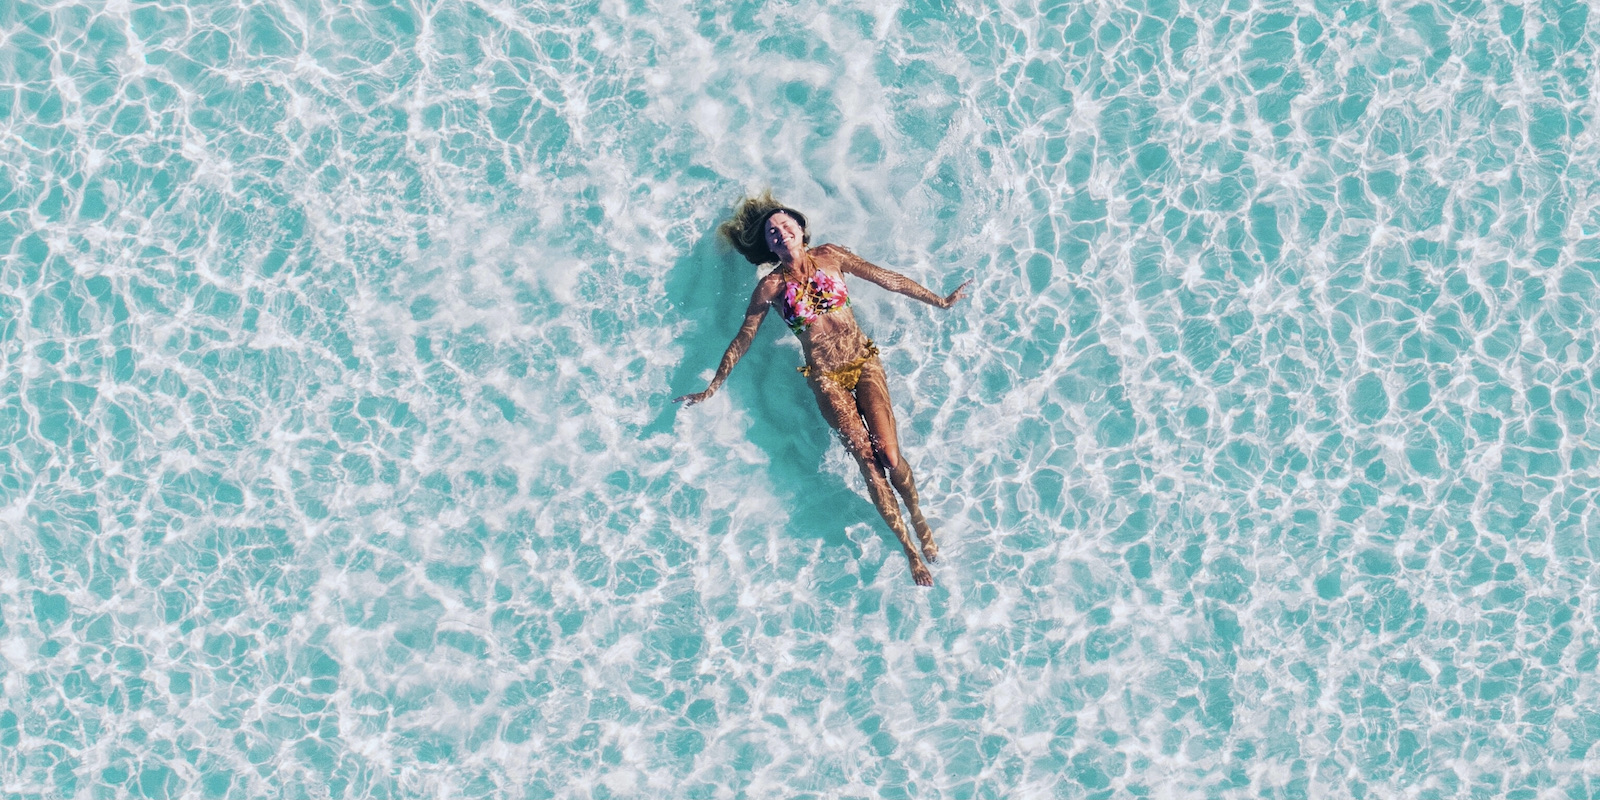 An overhead photograph of a woman in a bikini floating on a foamy blue surface.